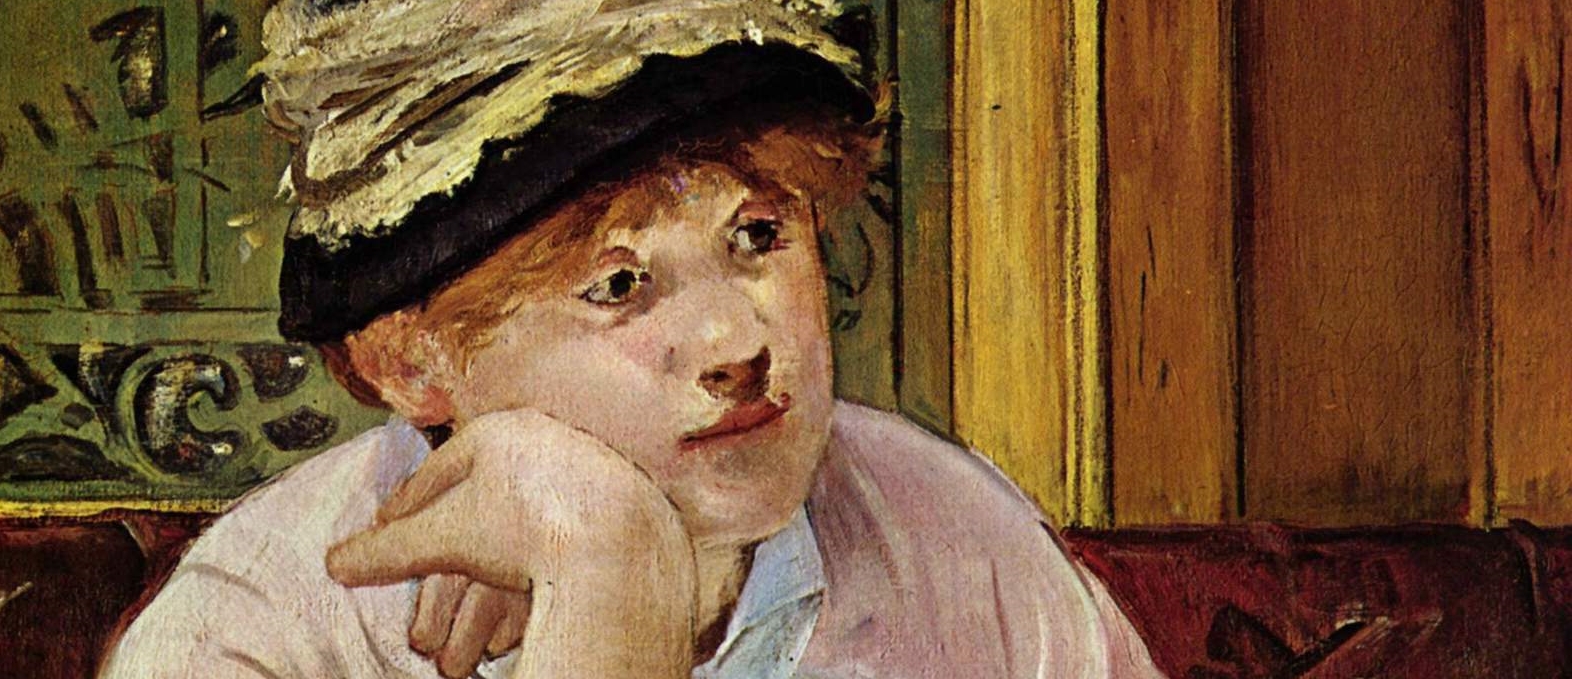 Edouard+Manet-1832-1883 (123).jpg